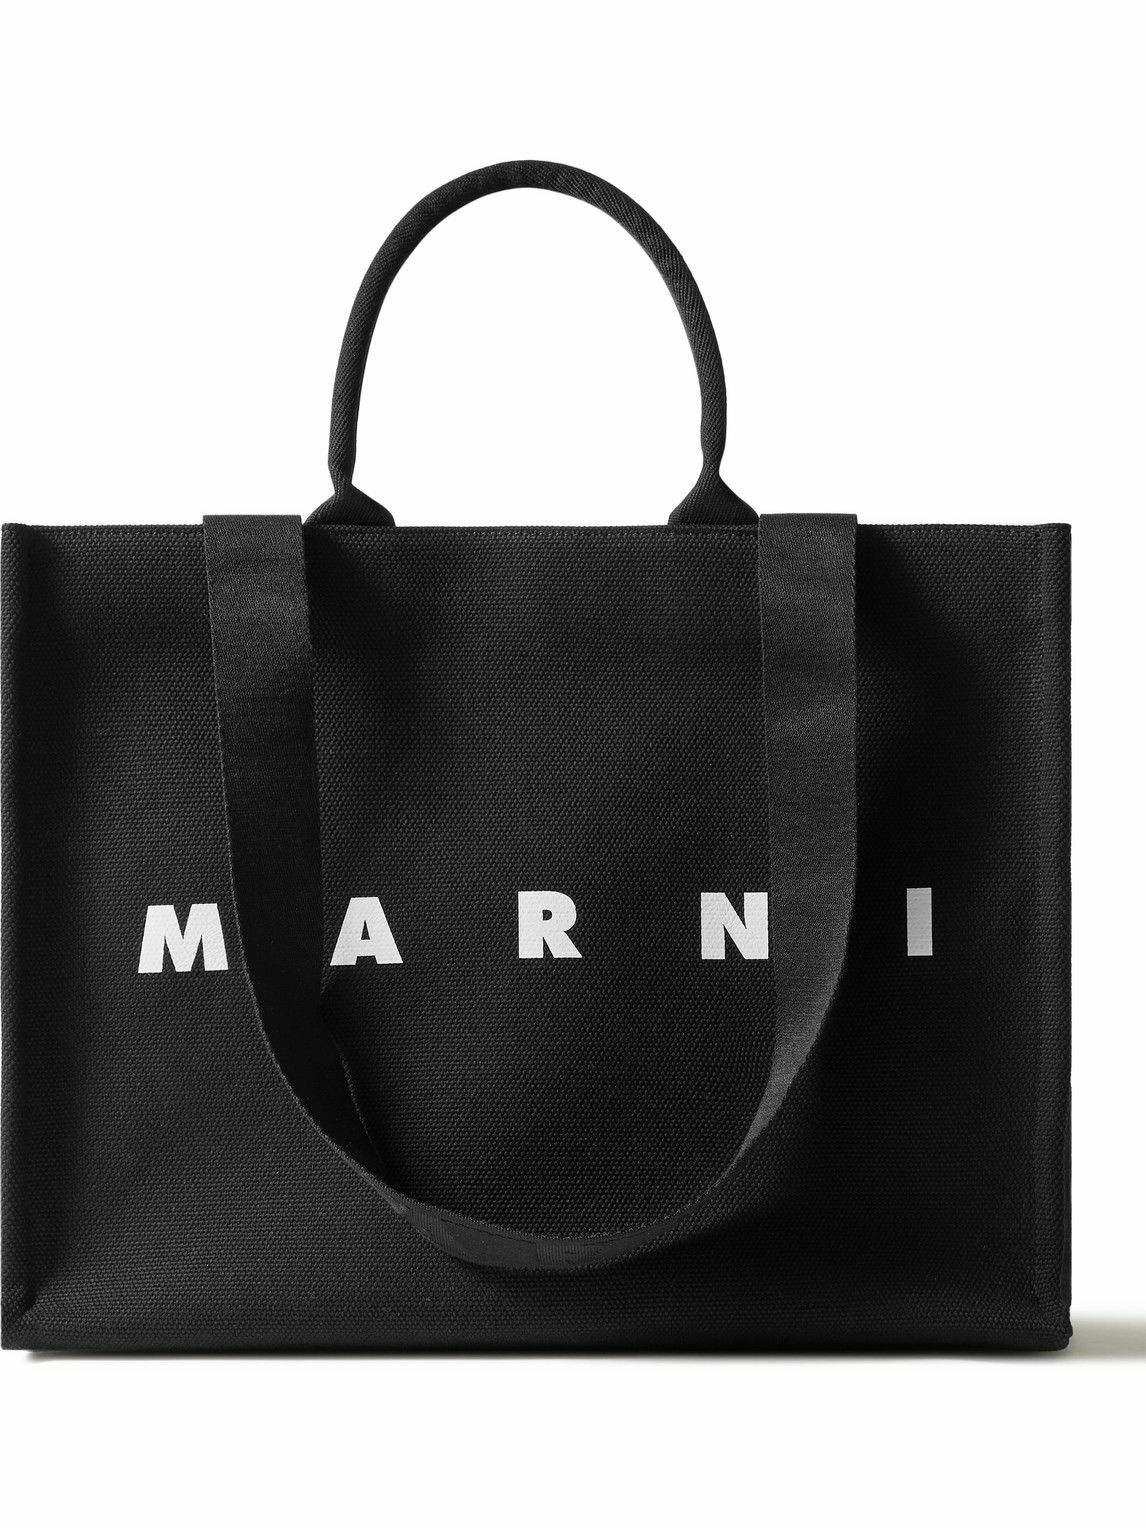 Marni - Logo-Print Canvas Tote Bag Marni